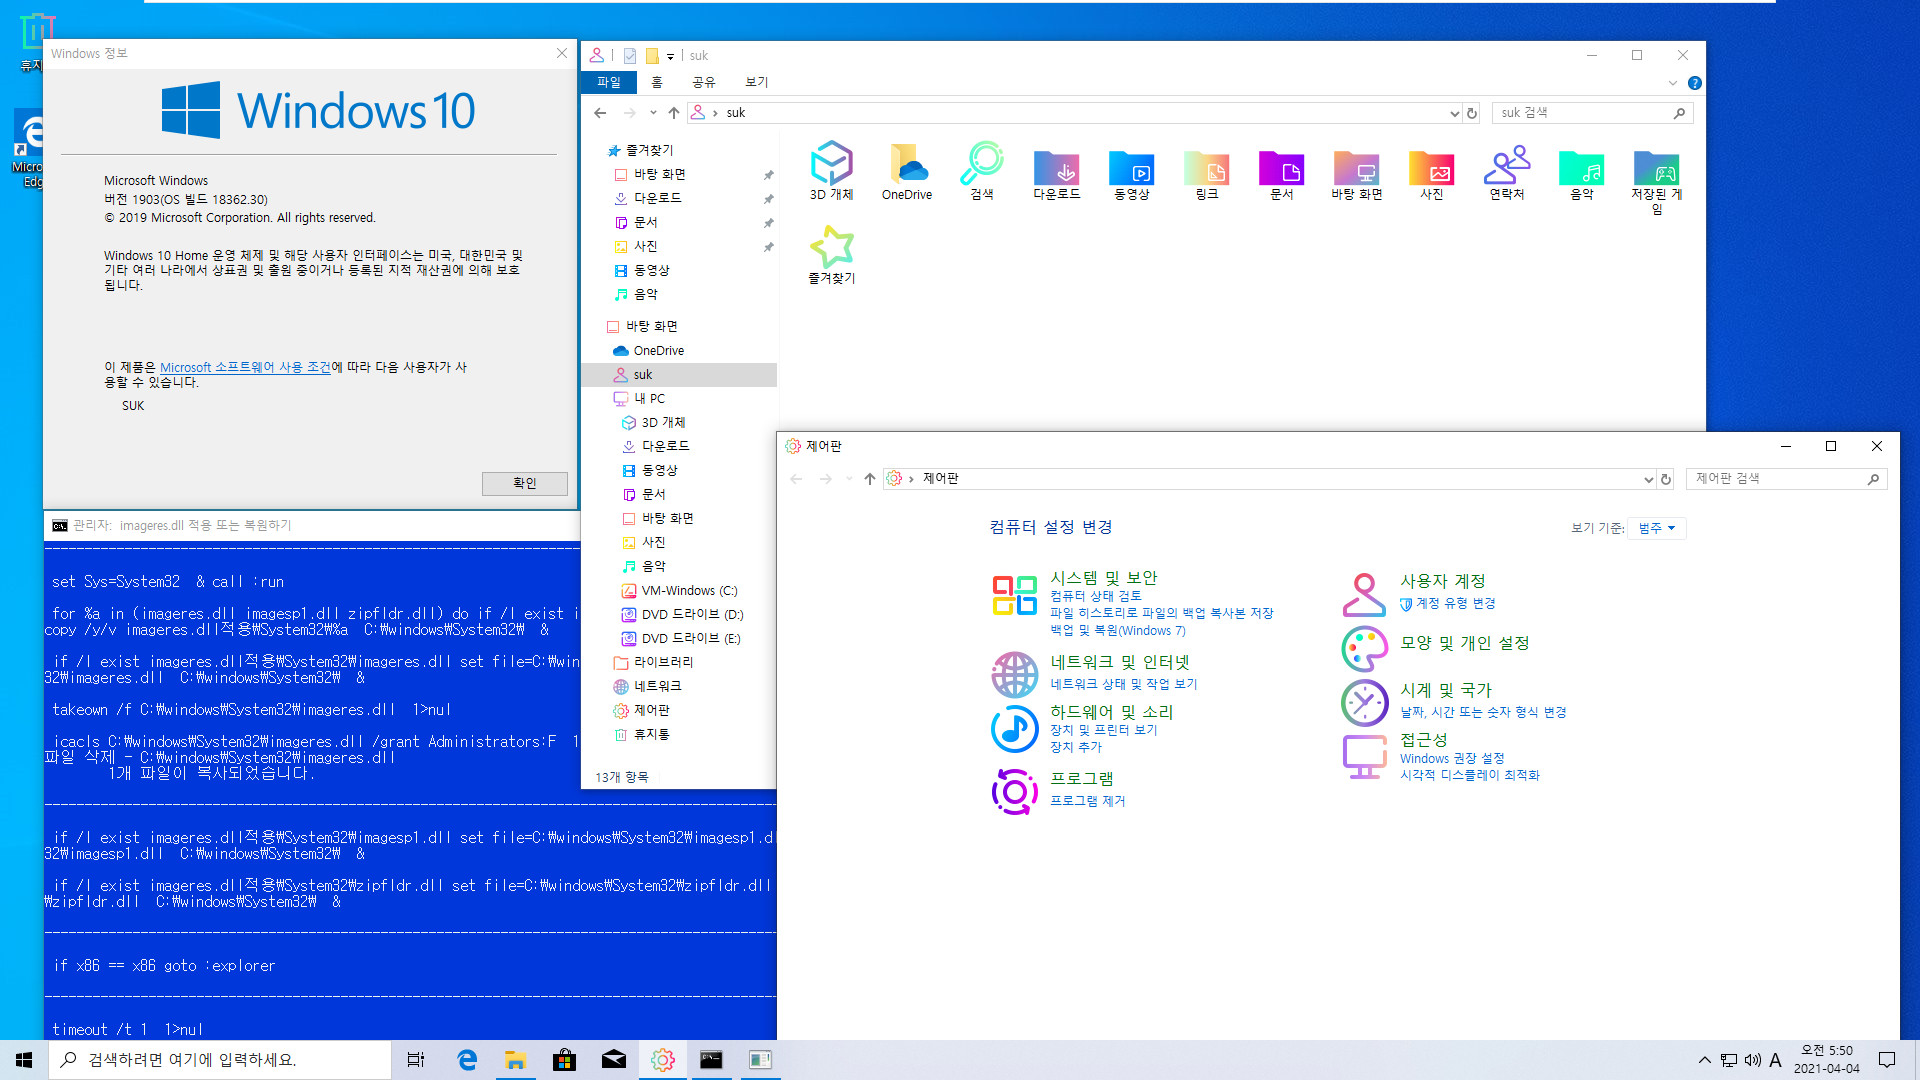 imageres.dll 윈도우 10 버전 1809용 파일이고 윈도우 7 라이브러리 안에 폴더 아이콘들이 정상 표시되기 때문에 윈도우 7 종료와 부팅 배경화면만 정상 표시되도록 7 원본 imageres.dll을 합쳐서 테스트 2021-04-04_055055.jpg